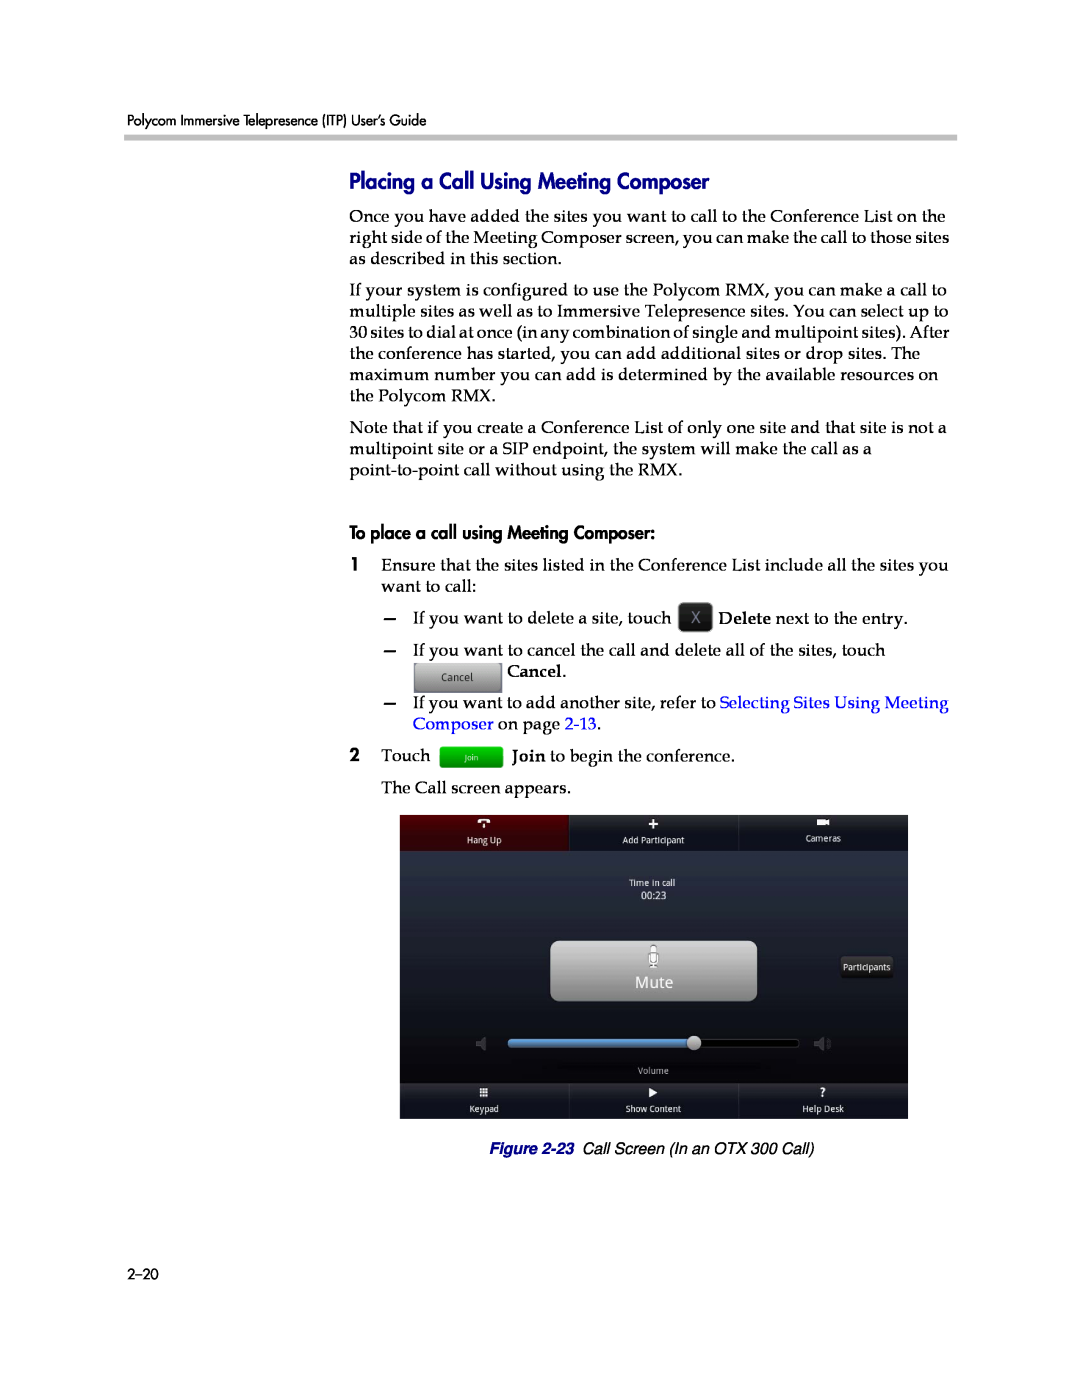 Polycom A, 3725-63211-002 manual Placing a Call Using Meeting Composer, To place a call using Meeting Composer 